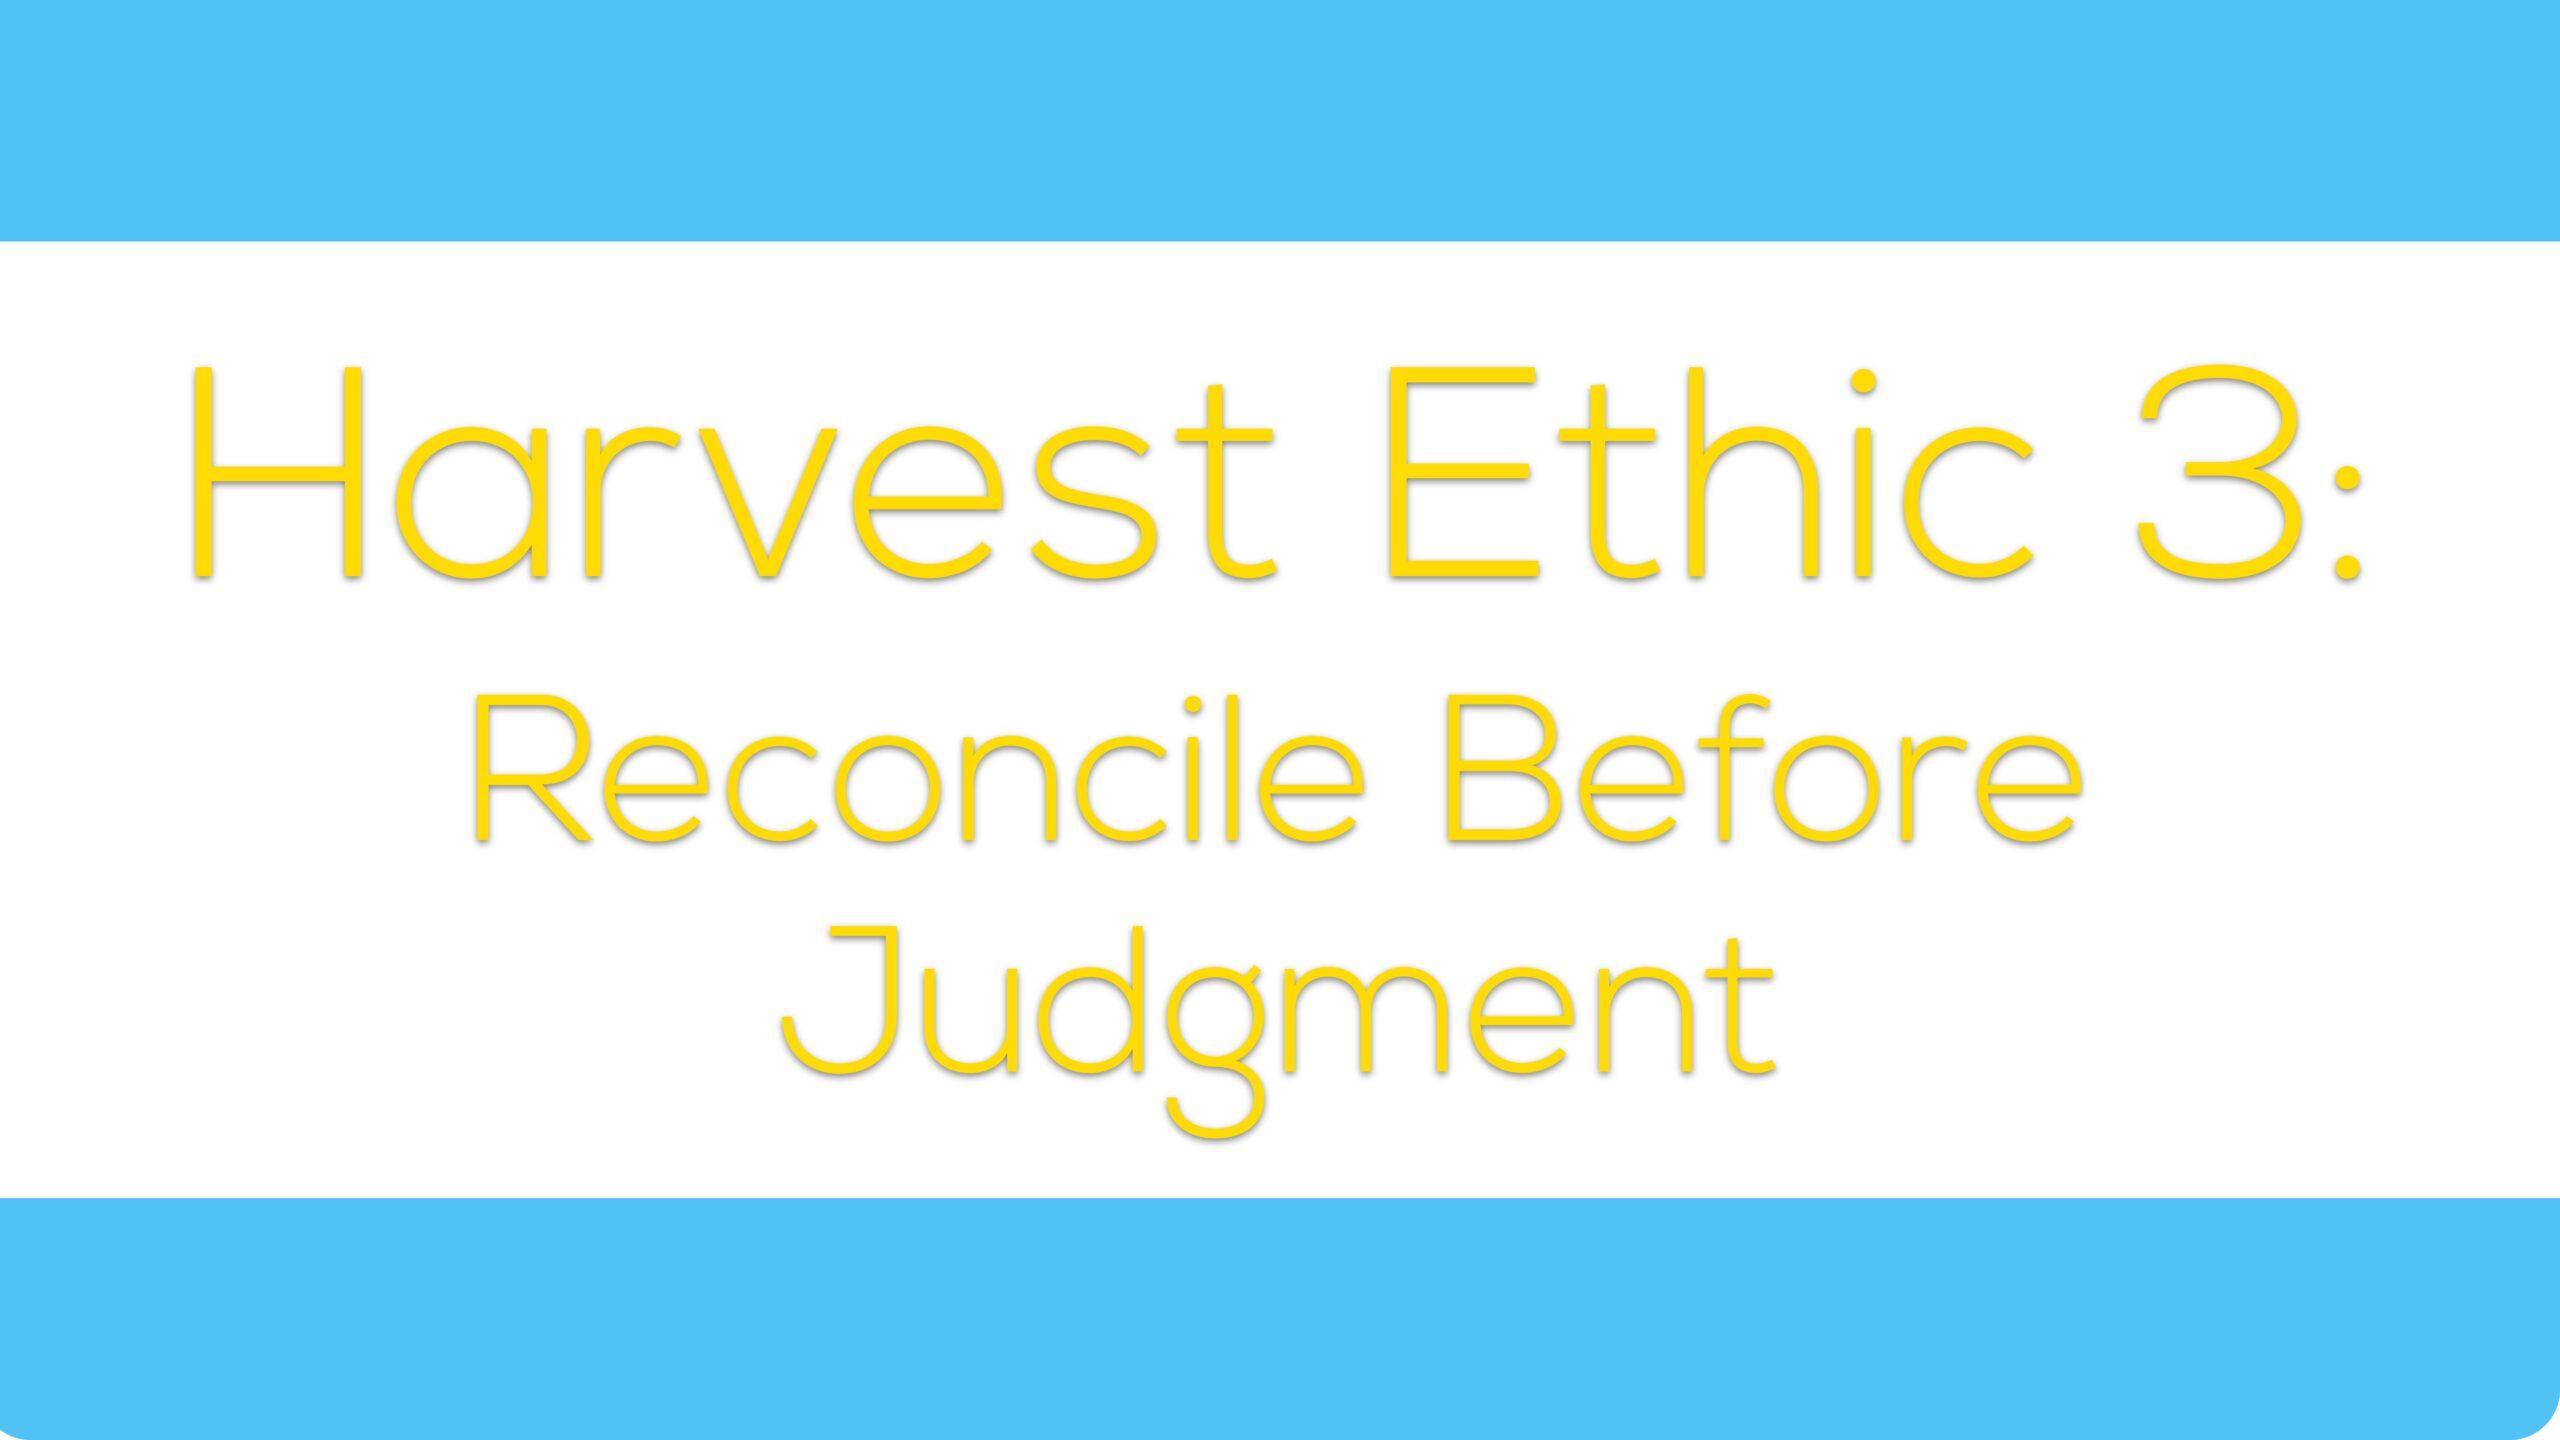 Harvest Ethic 3: Reconcile Before Judge